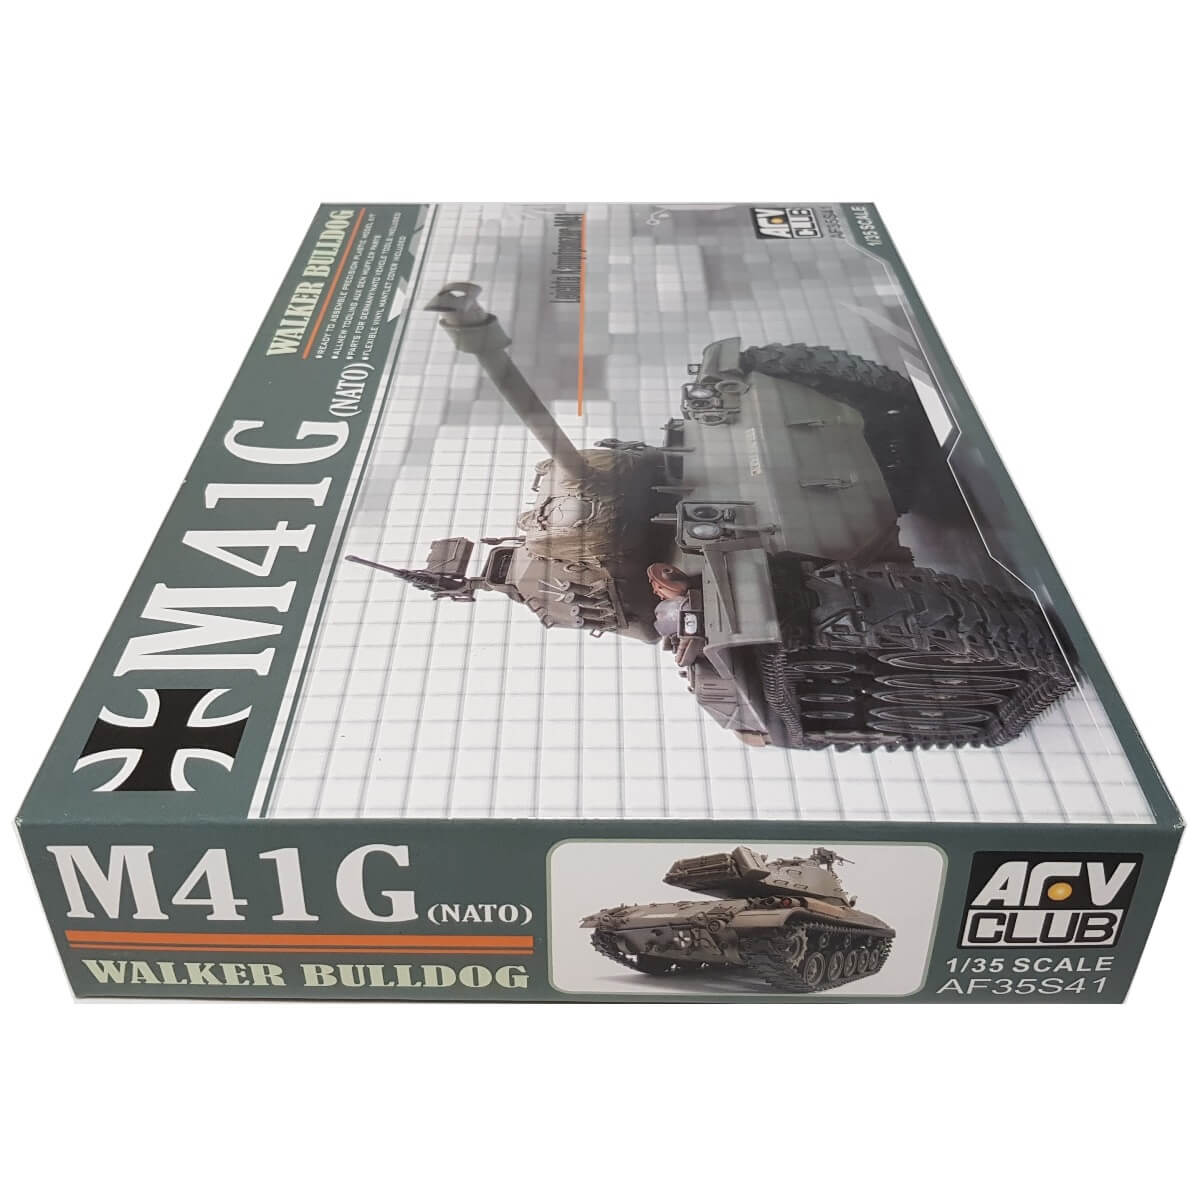 1:35 M41G NATO Walker Bulldog - AFV CLUB